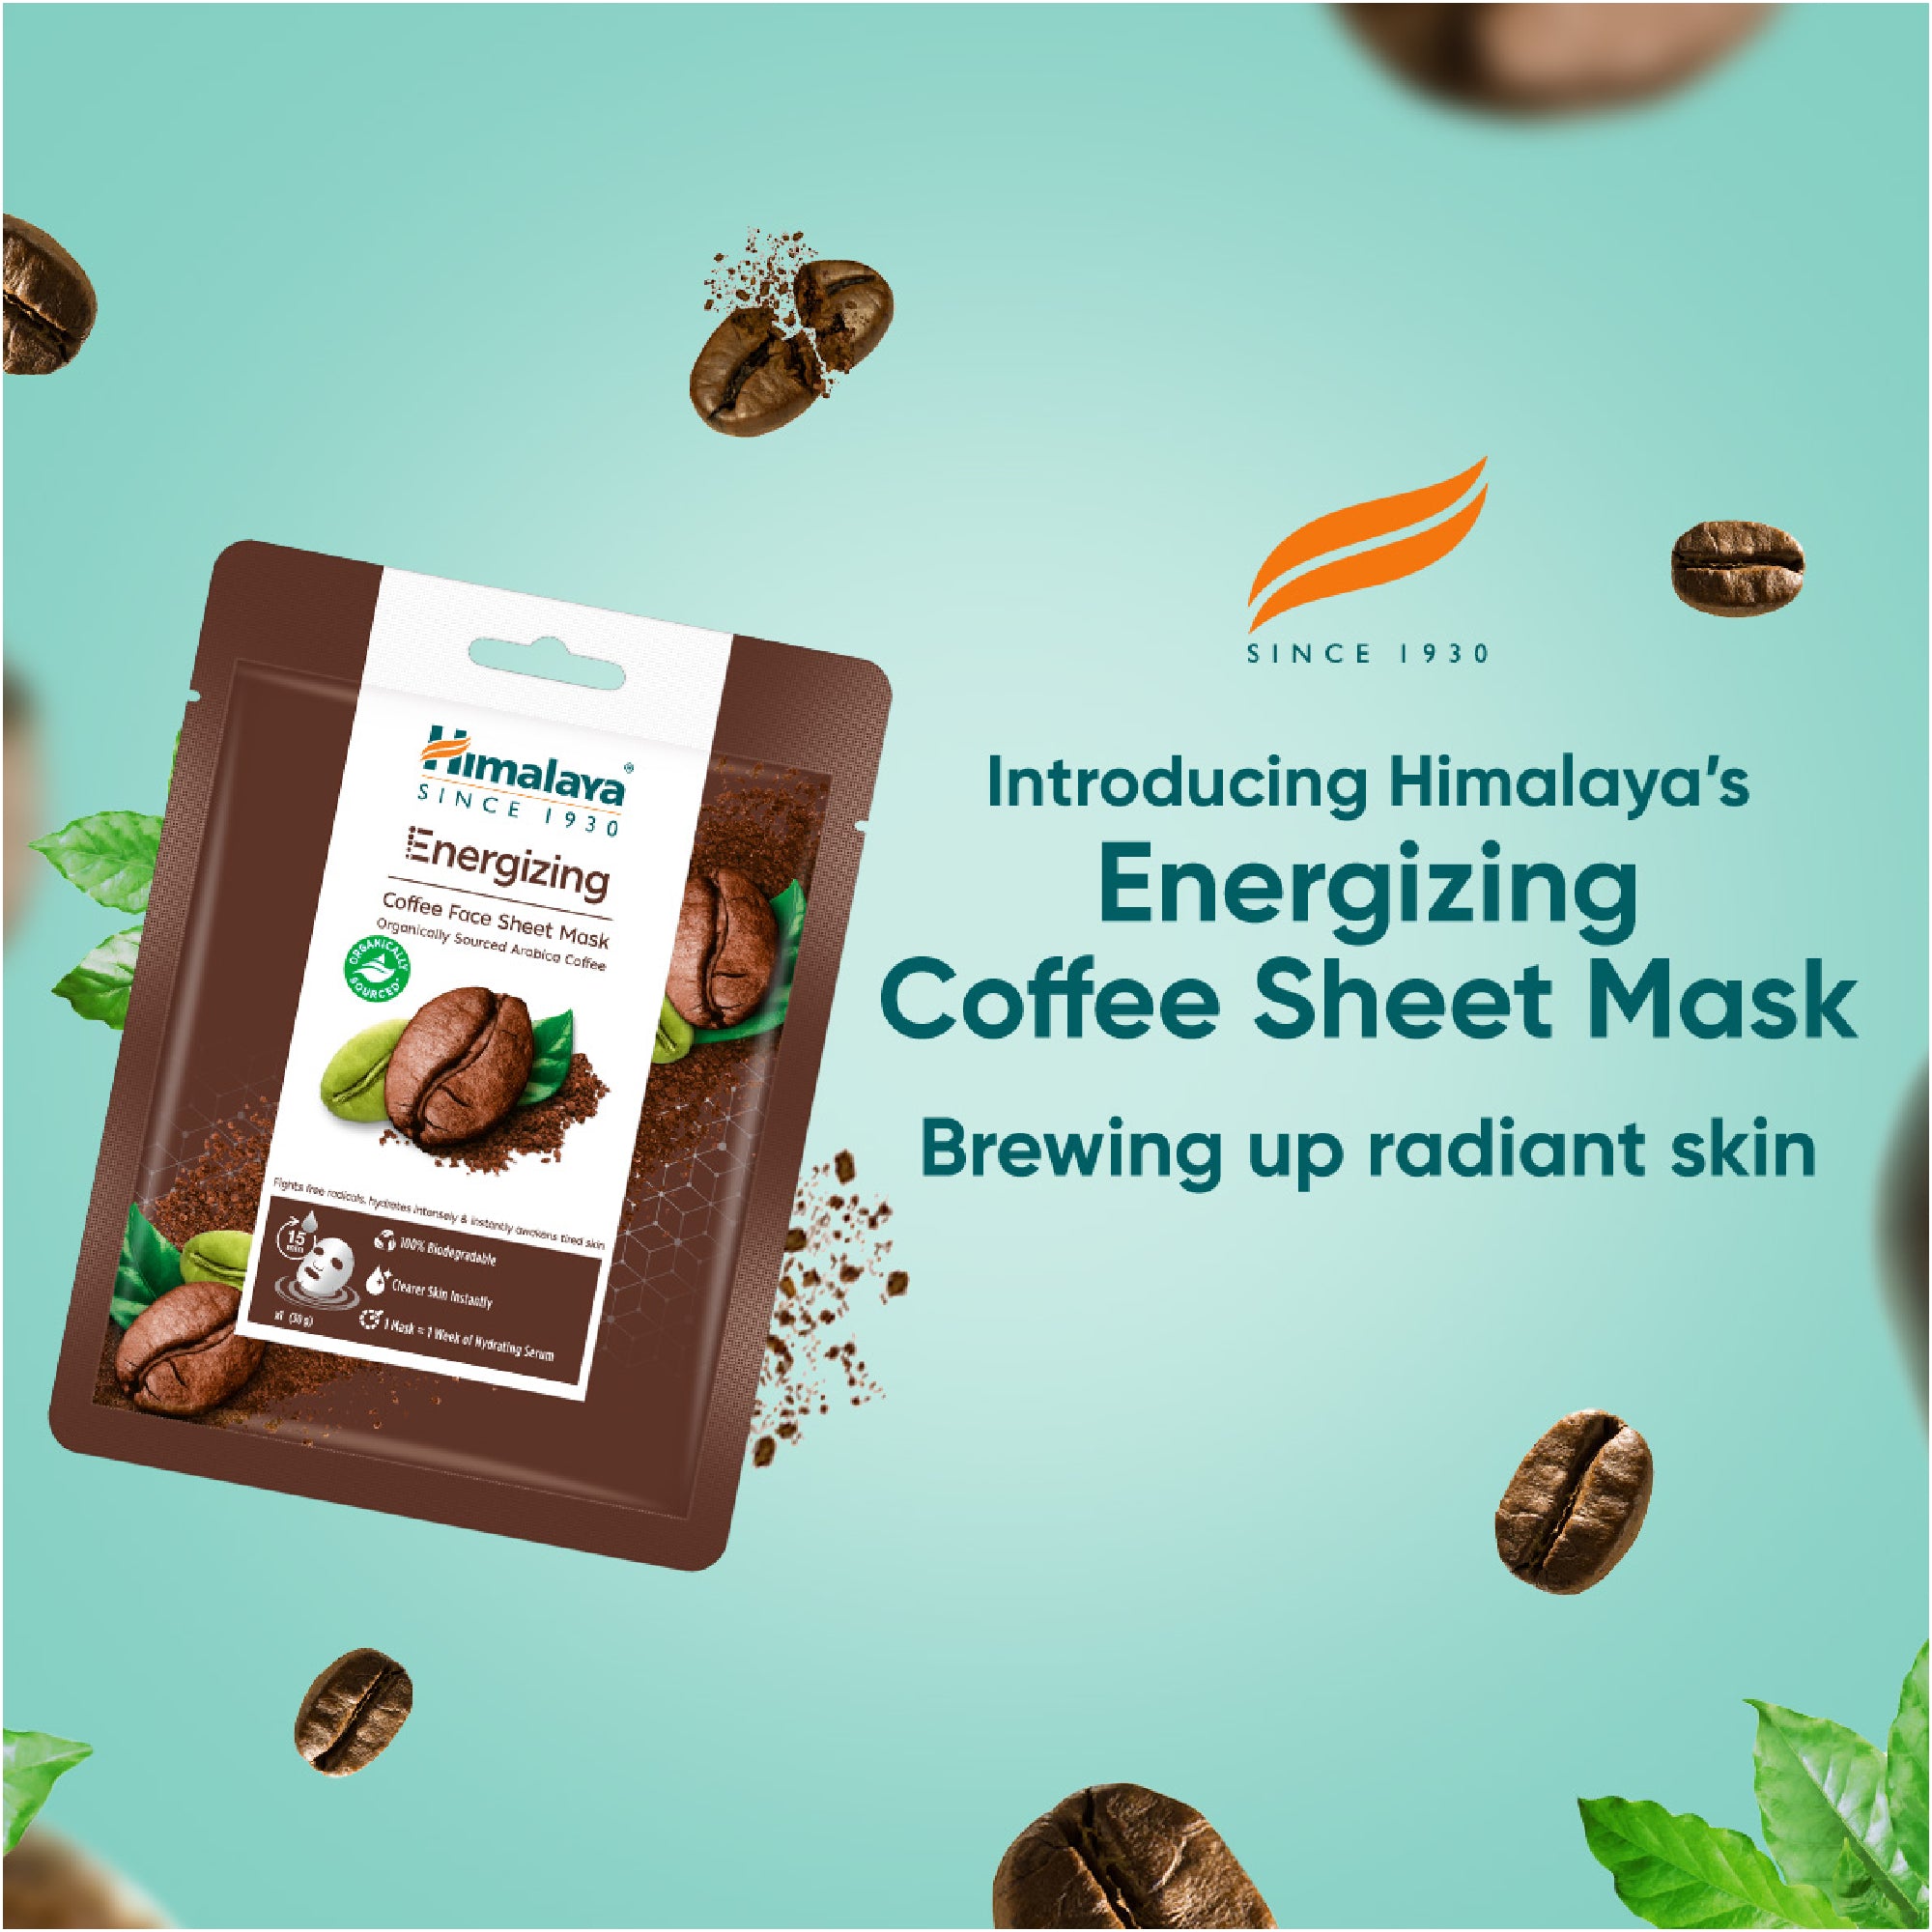 Himalaya Energizing Coffee Sheet Mask - Brewing up radiant skin